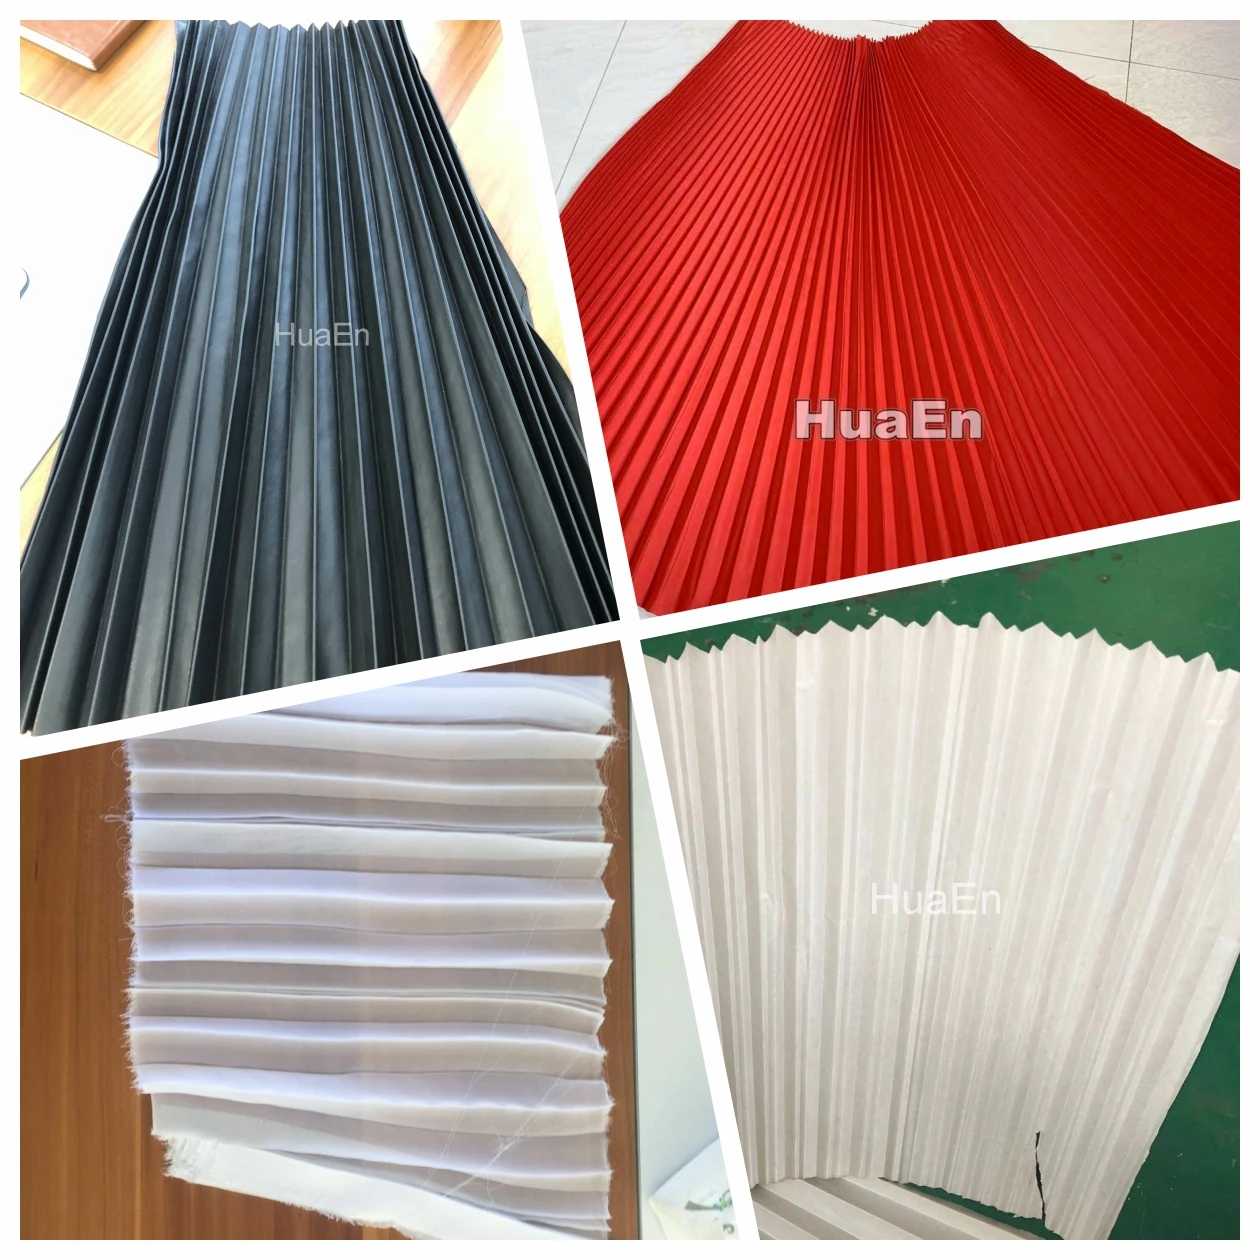 Manufacturer HuaEn 217 shirt pleating machine 516 sunray fanshaped blind accordion plisse 20mm standing pleat making machine